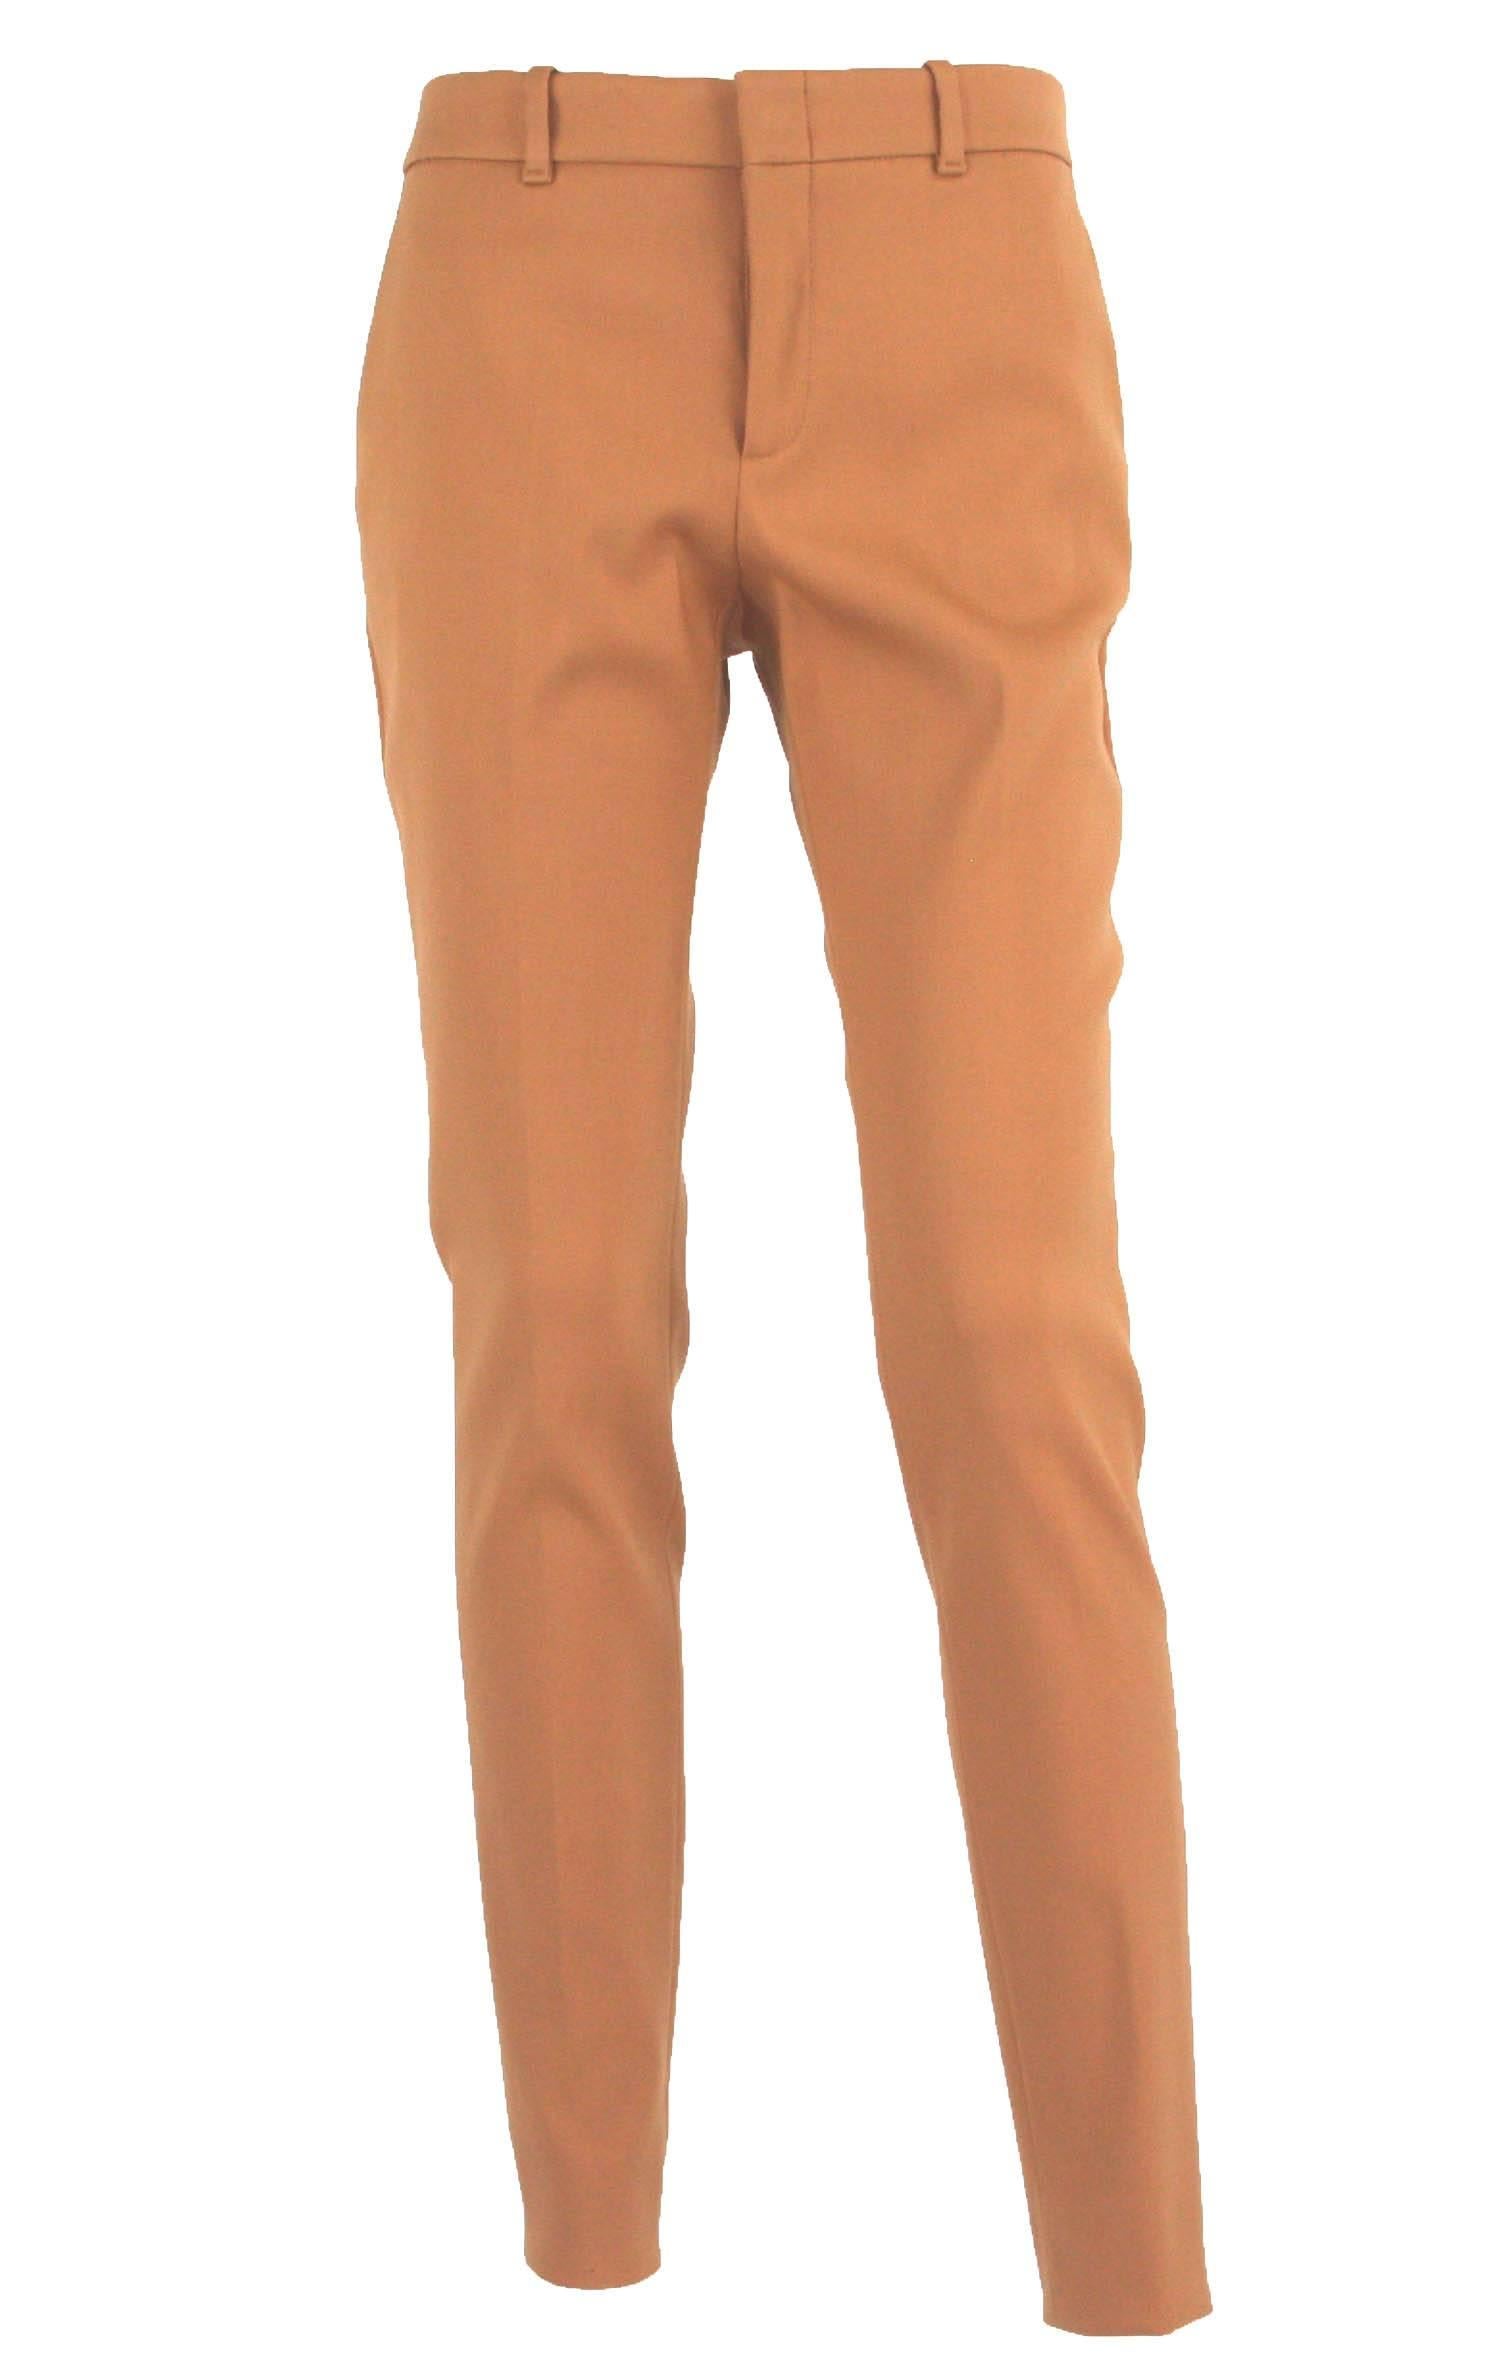 New Gucci Salmon Pant Suit Silk Blouse Stretch Slim Pants Leather Belt 42 - 6/8 For Sale 2